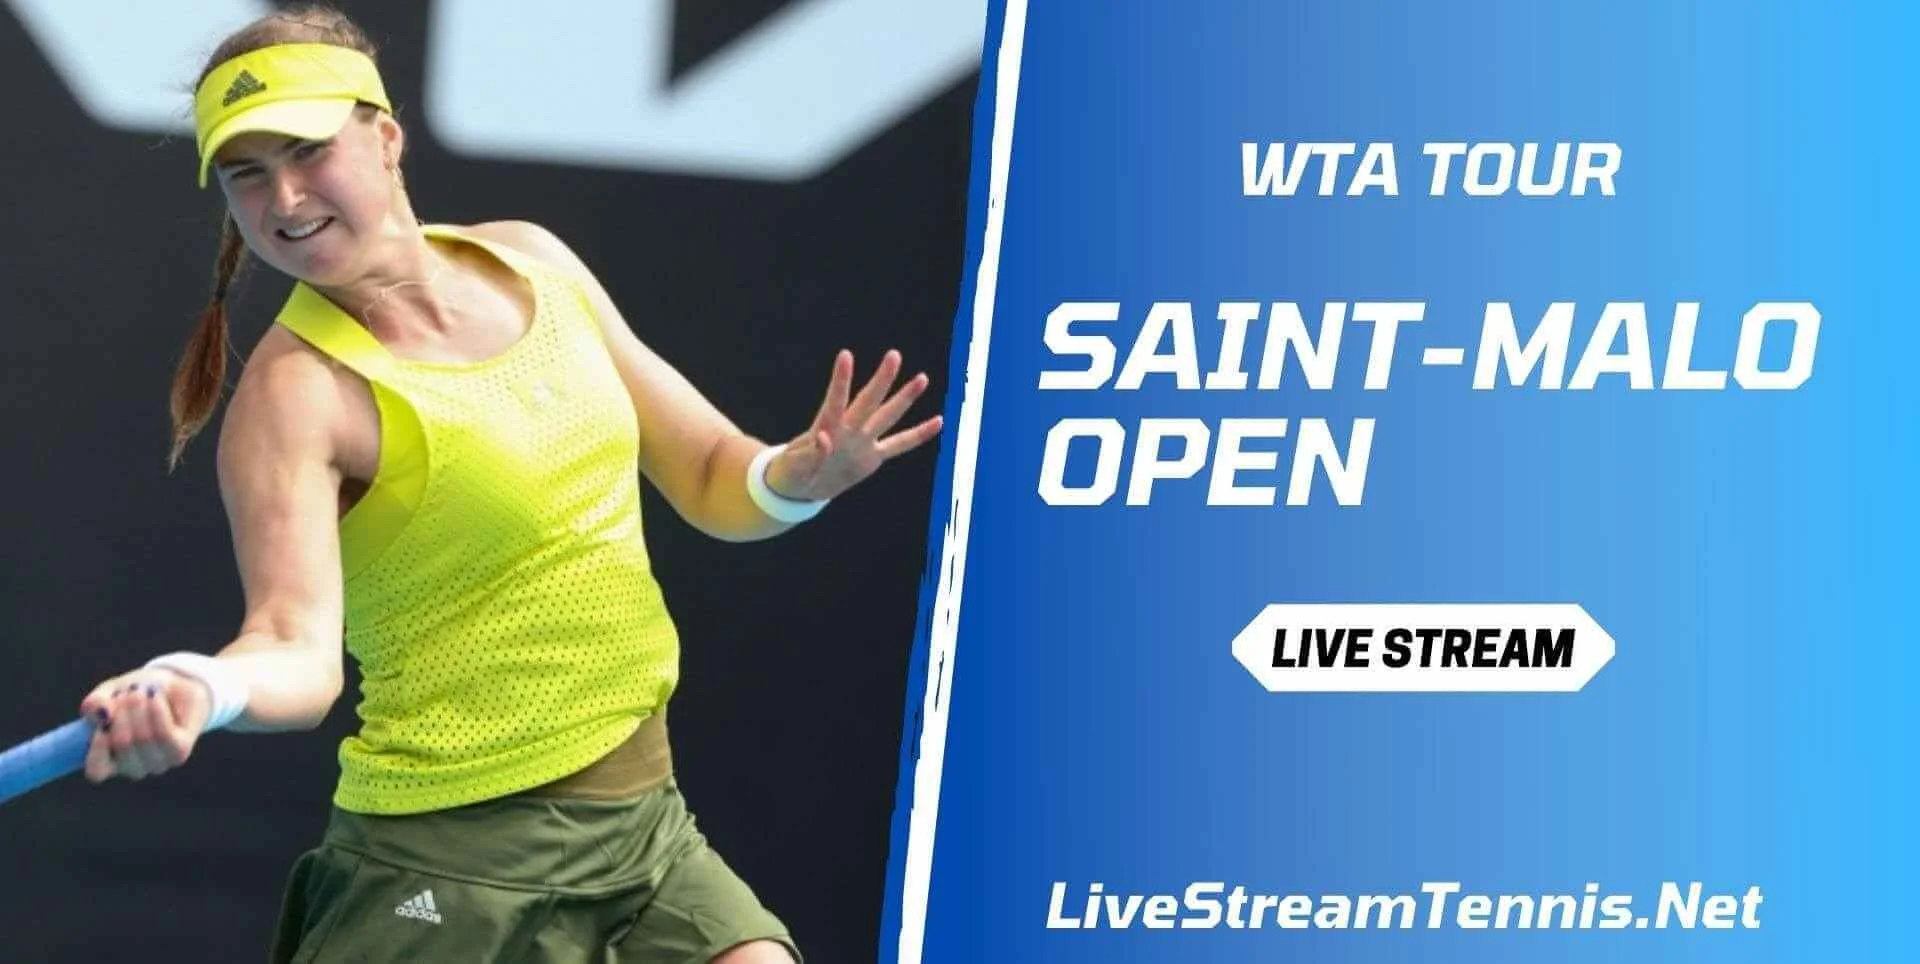 saint-malo-open-live-stream-tennis-wta